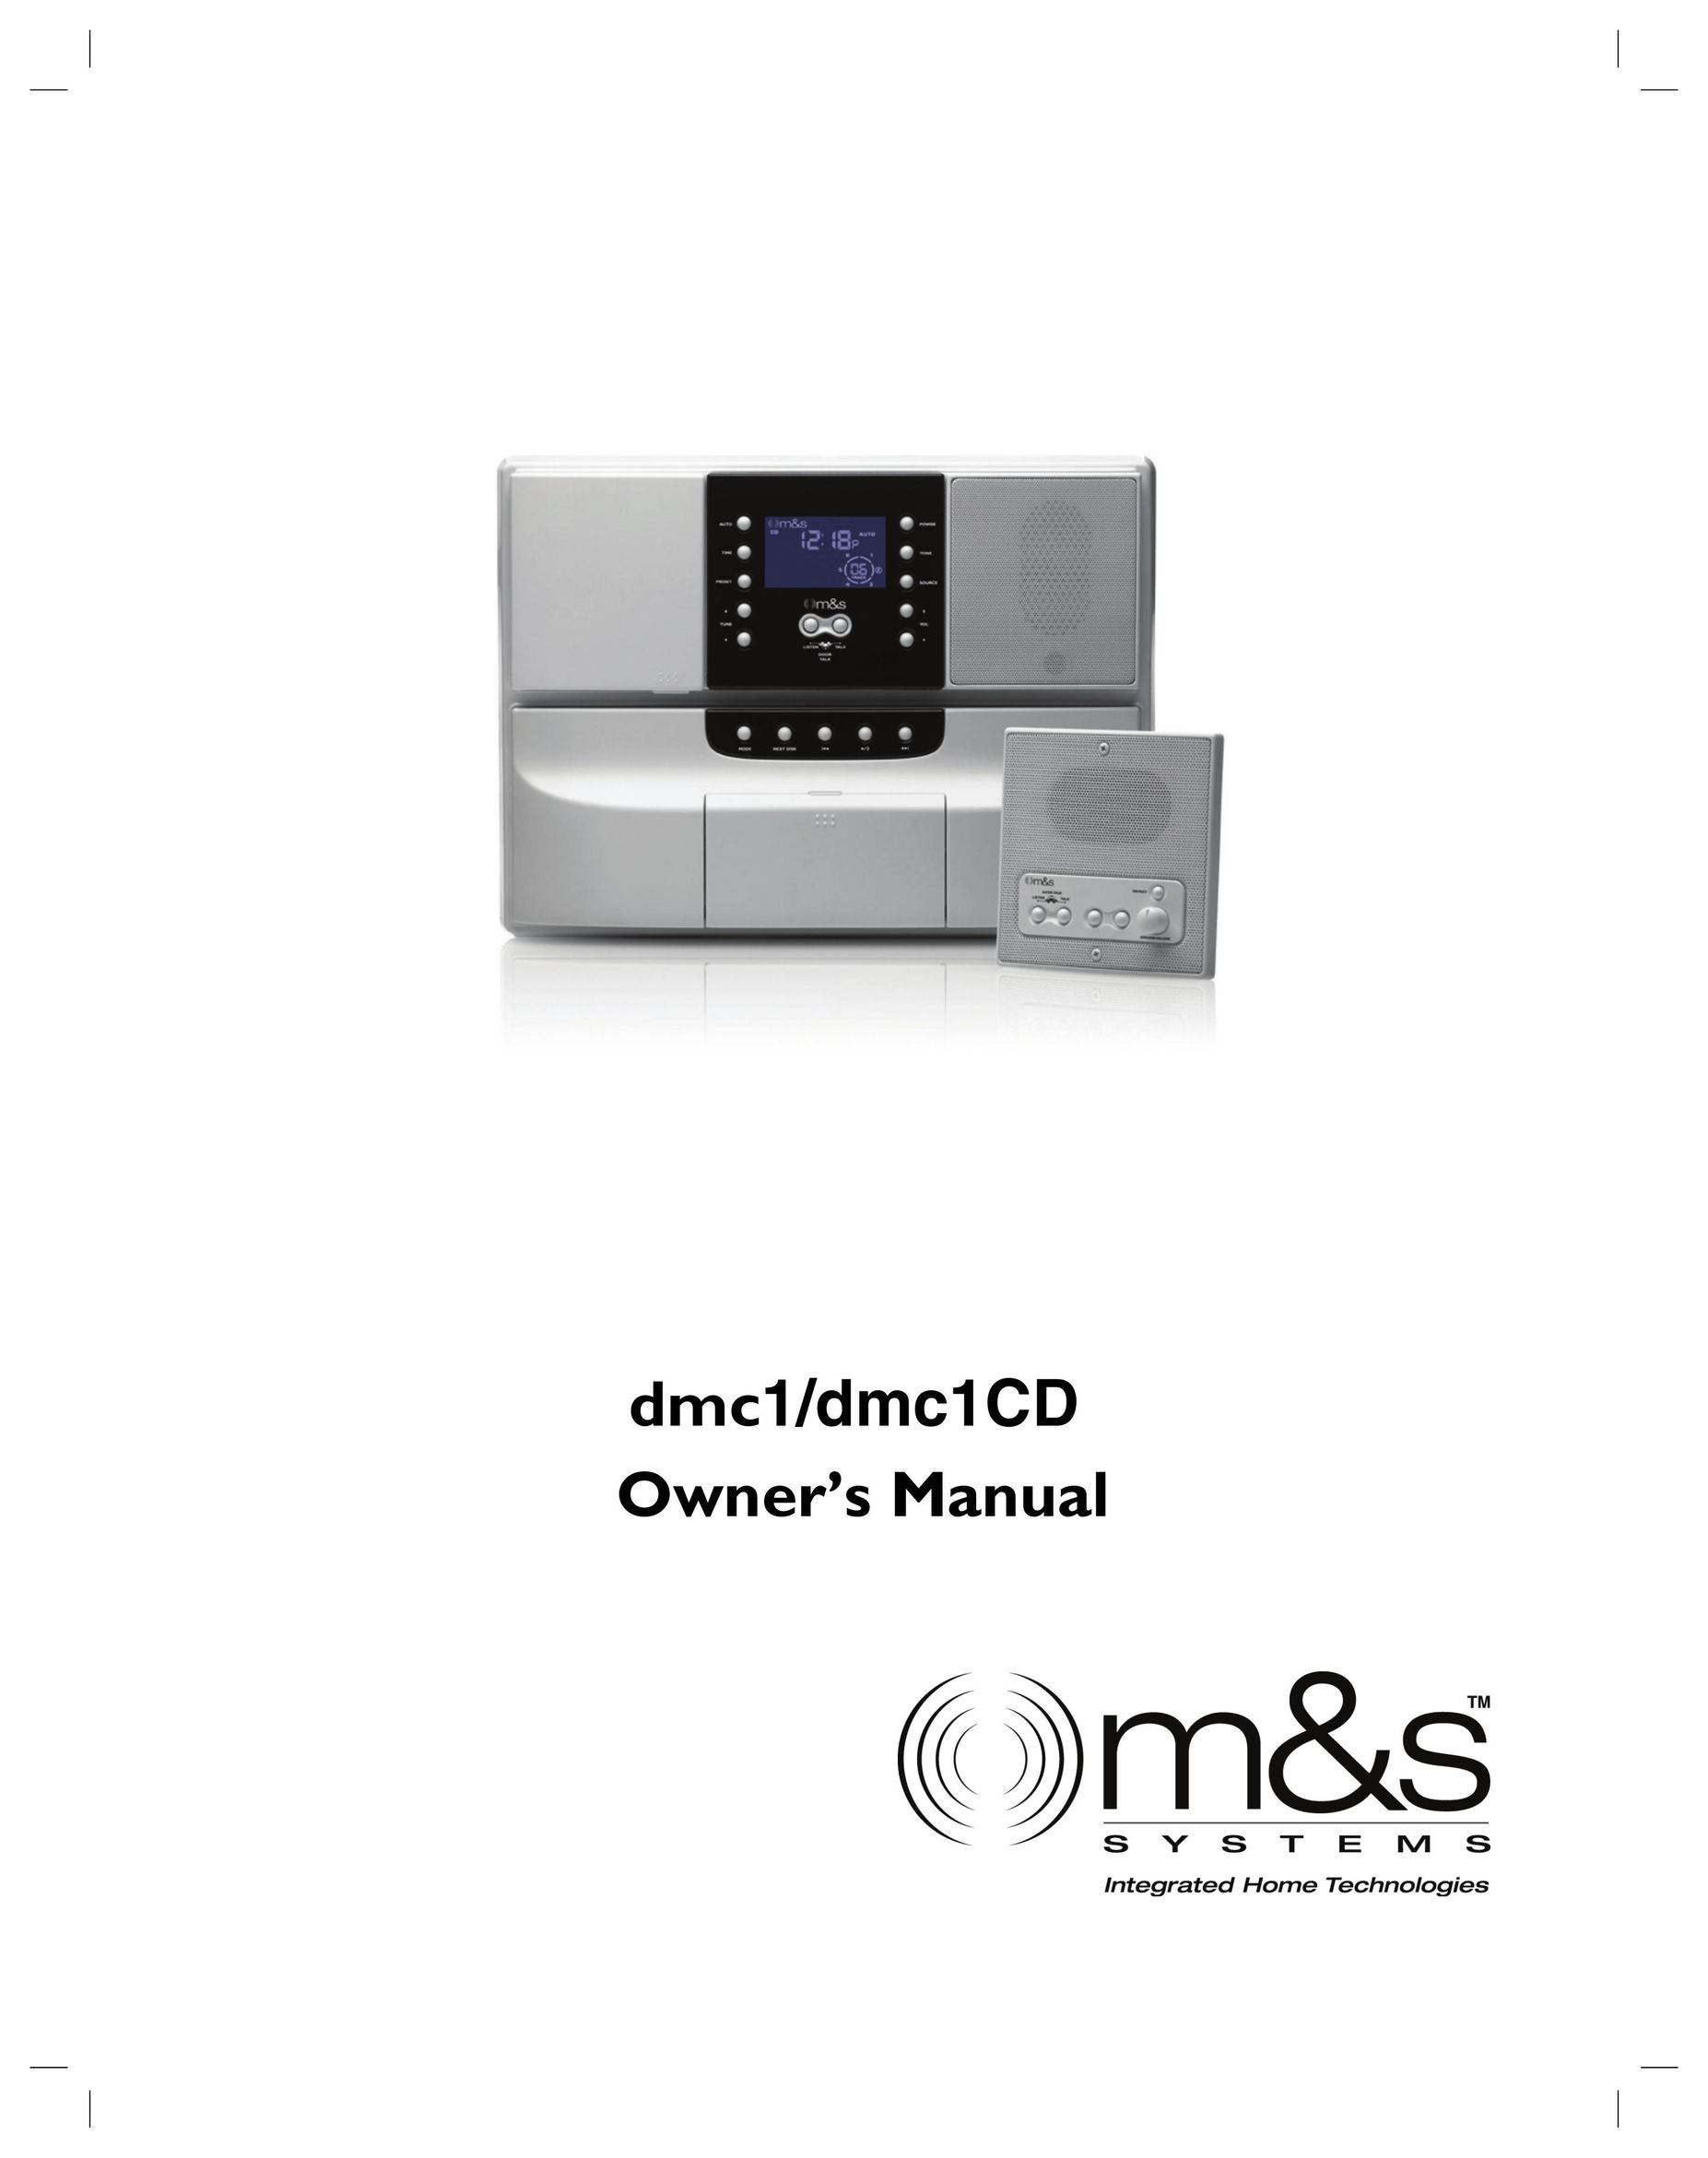 M&S Systems dmc1/dmc1CD Portable Speaker User Manual